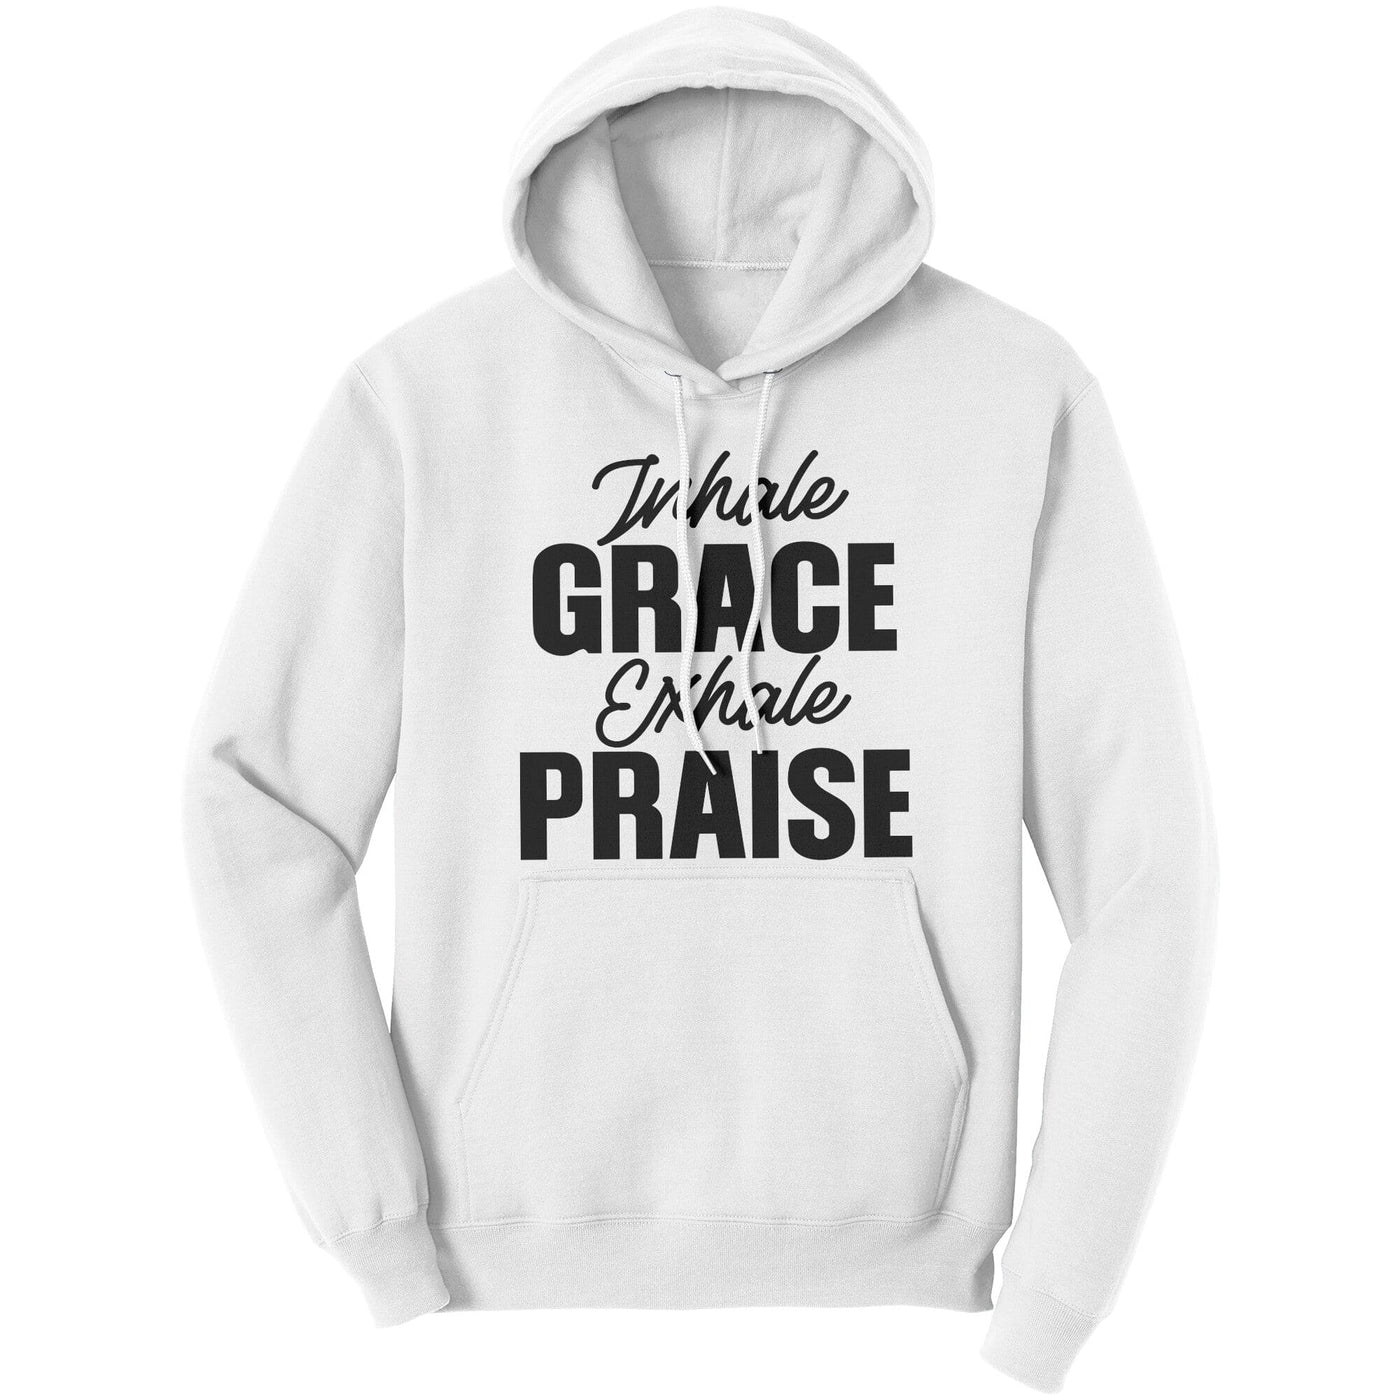 Graphic Hoodie Sweatshirt Inhale Grade Exhale Praise Hooded Shirt - Unisex